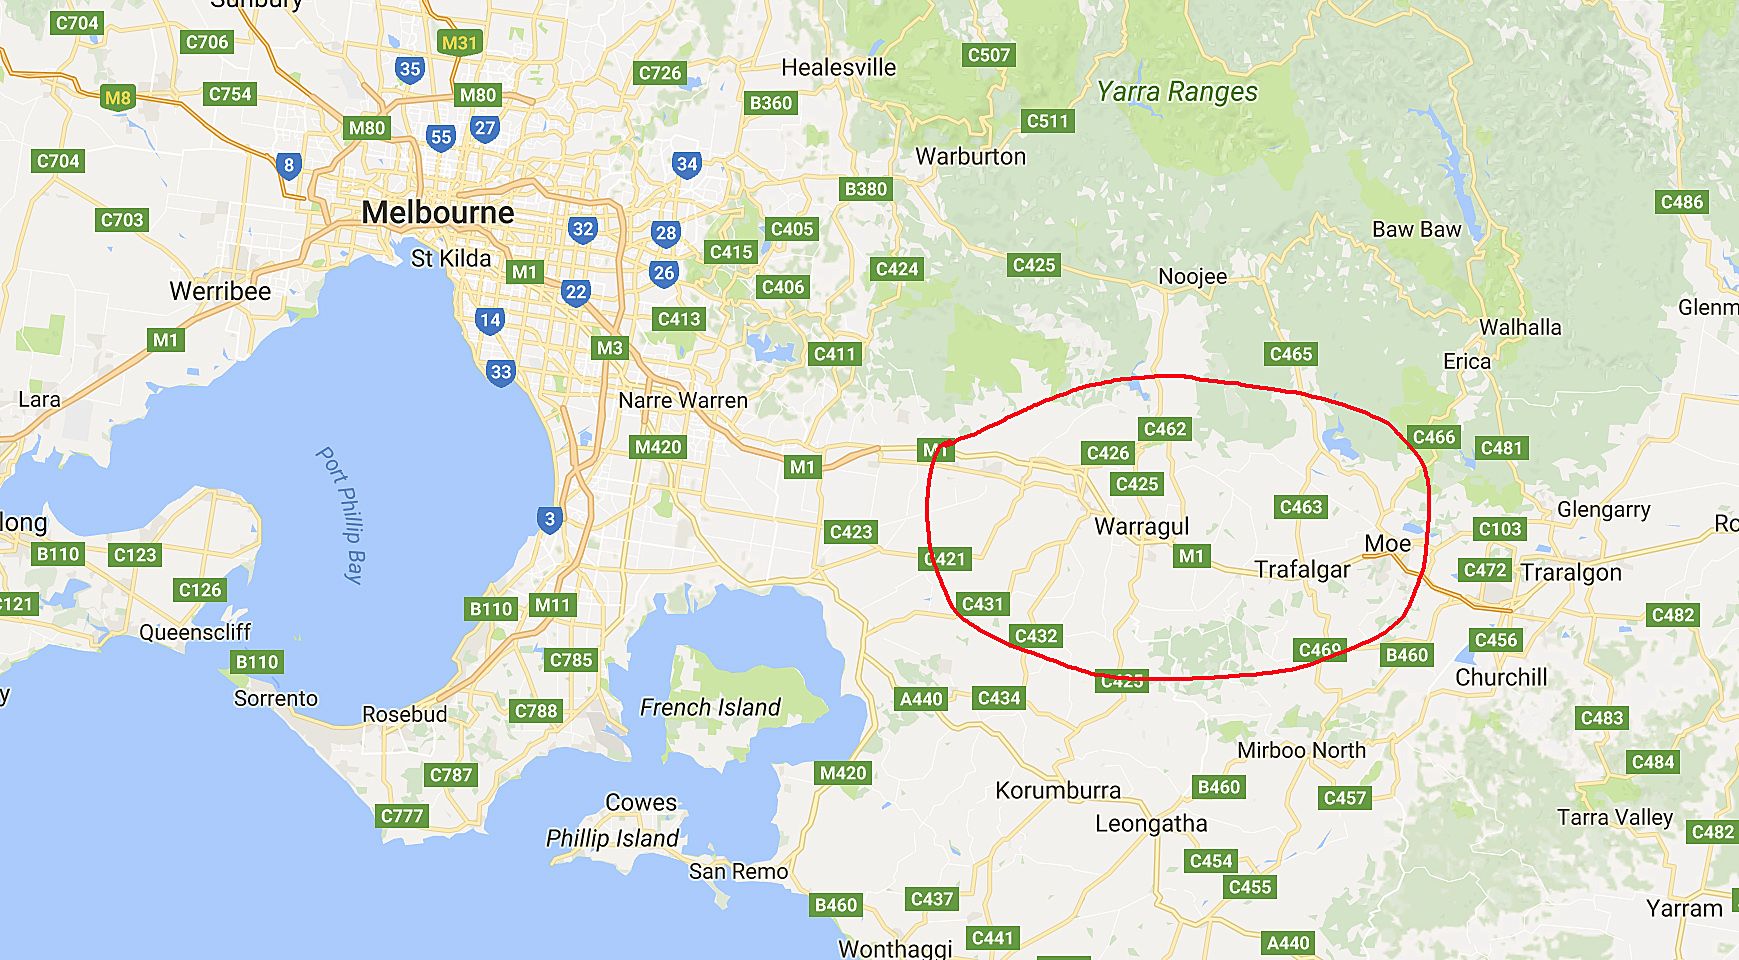 West Gippsland, about 100 kilometres east of Melbourne.